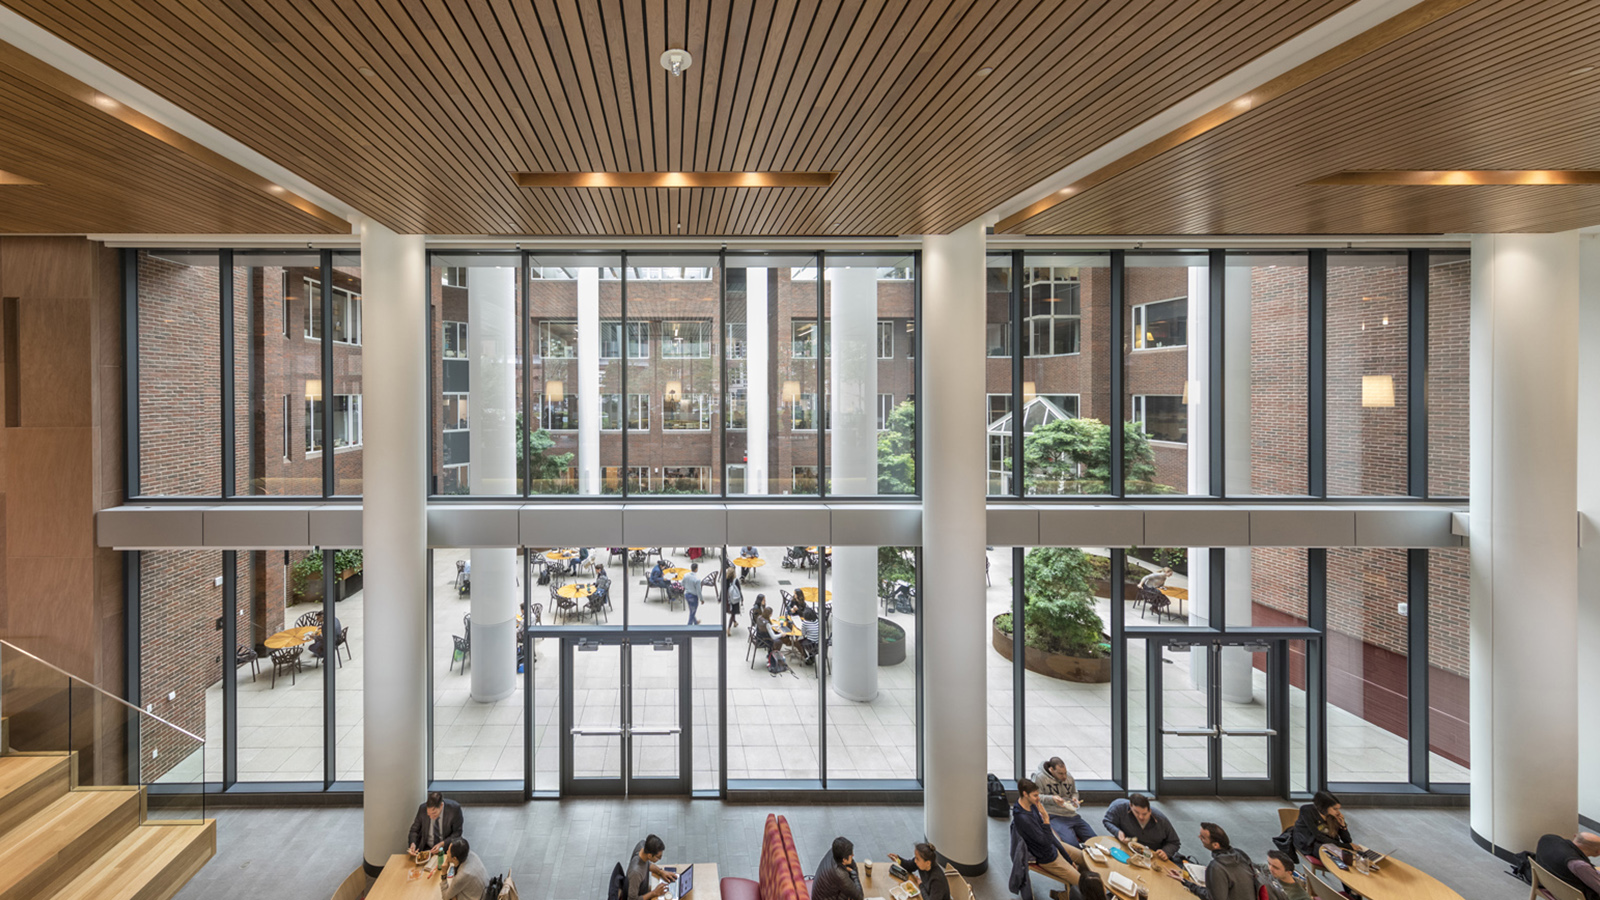 Harvard Kennedy Pavilions lounge area that expands into atrium